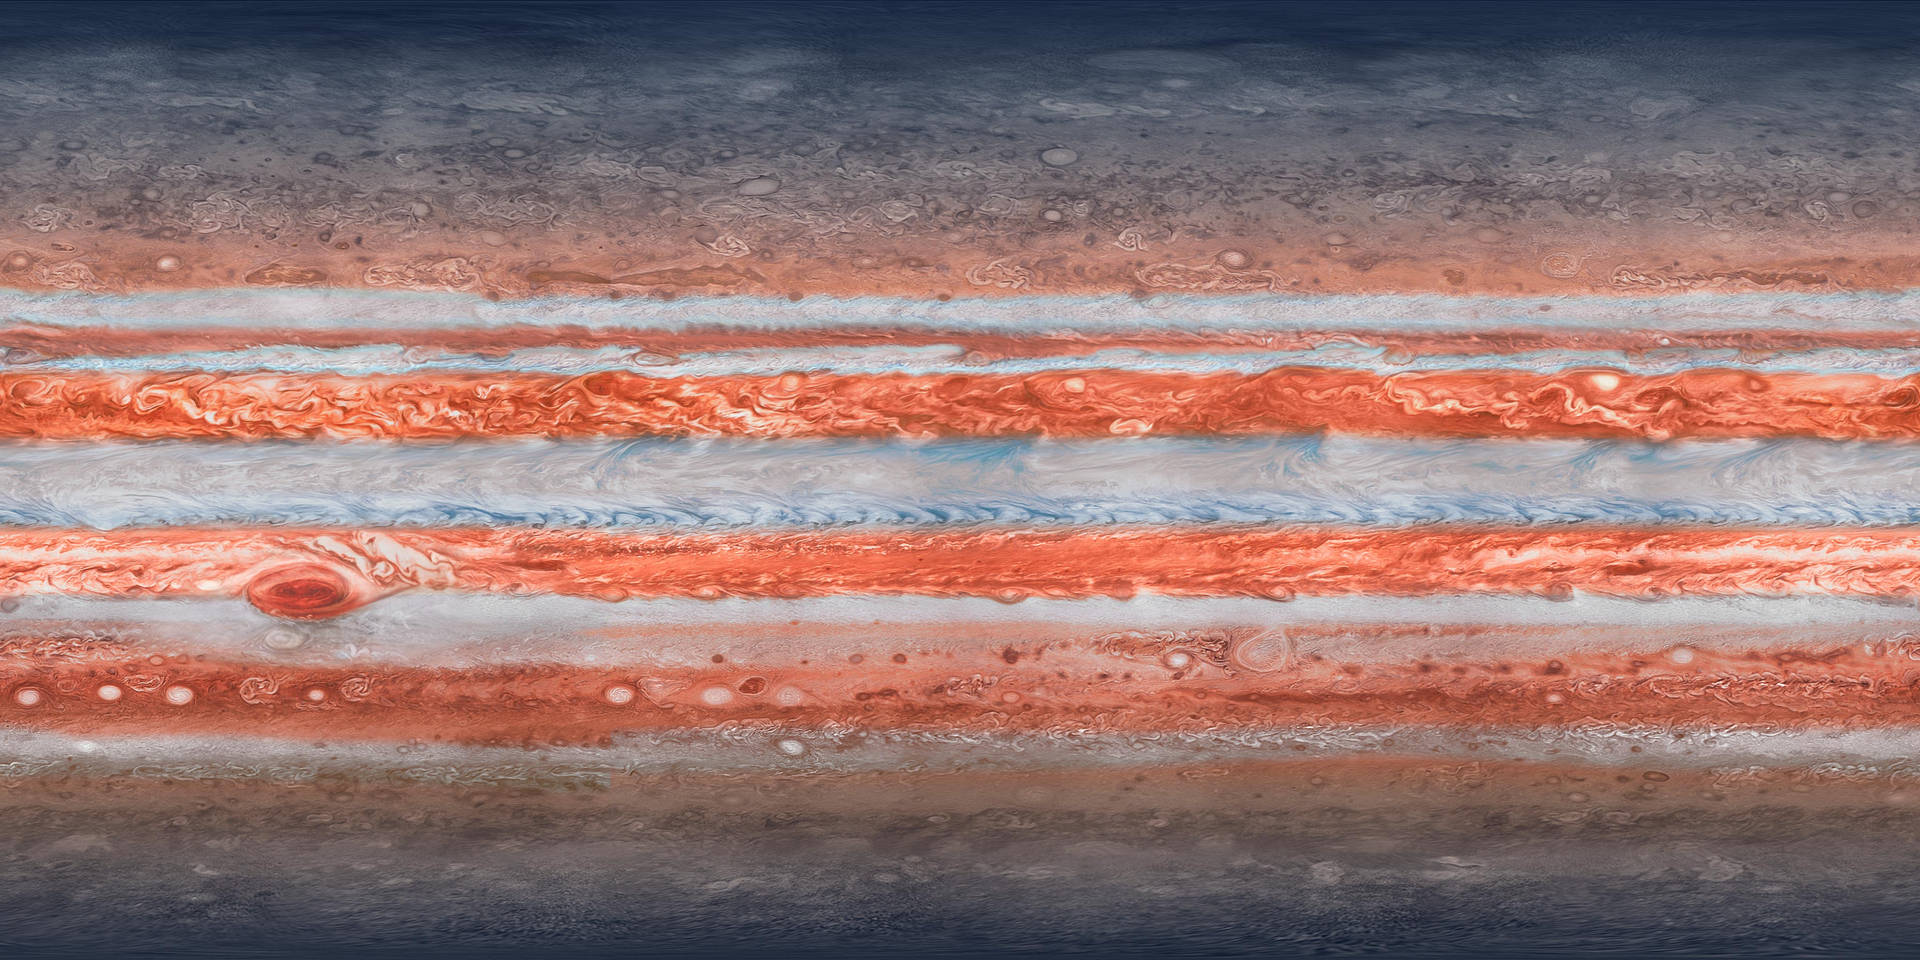 Ipadpro Jupiter-oberfläche. Wallpaper